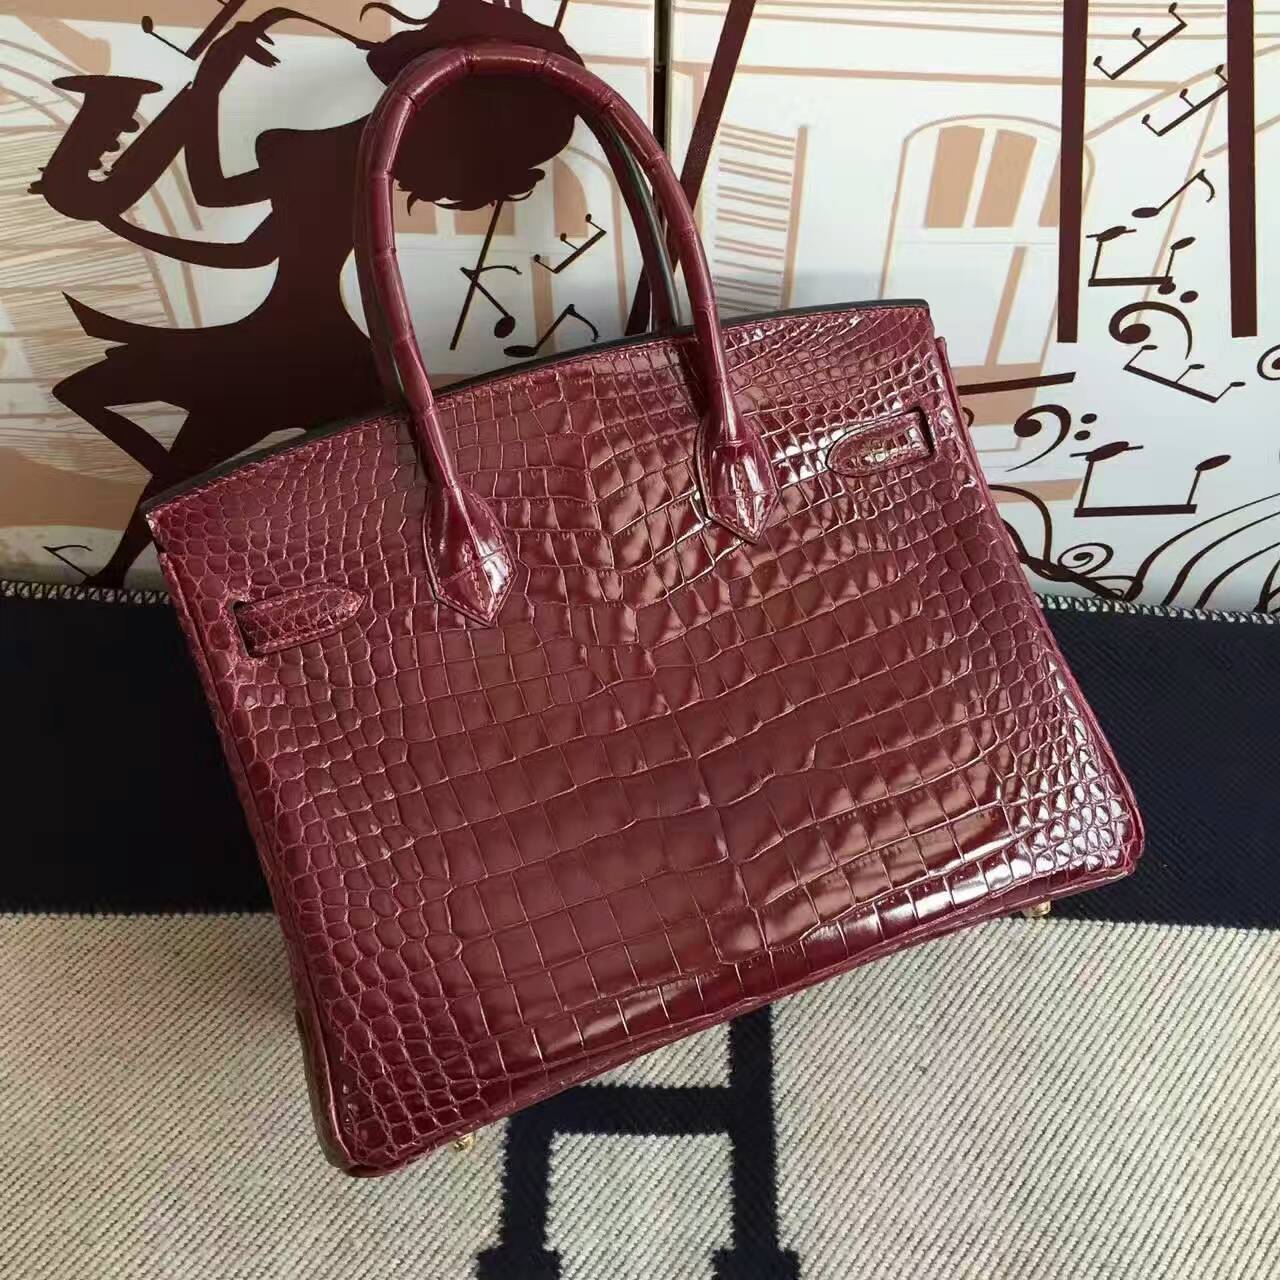 Discount Hermes CK57 Bordeaux Porosus Crocodile Leather Birkin Bag 30cm